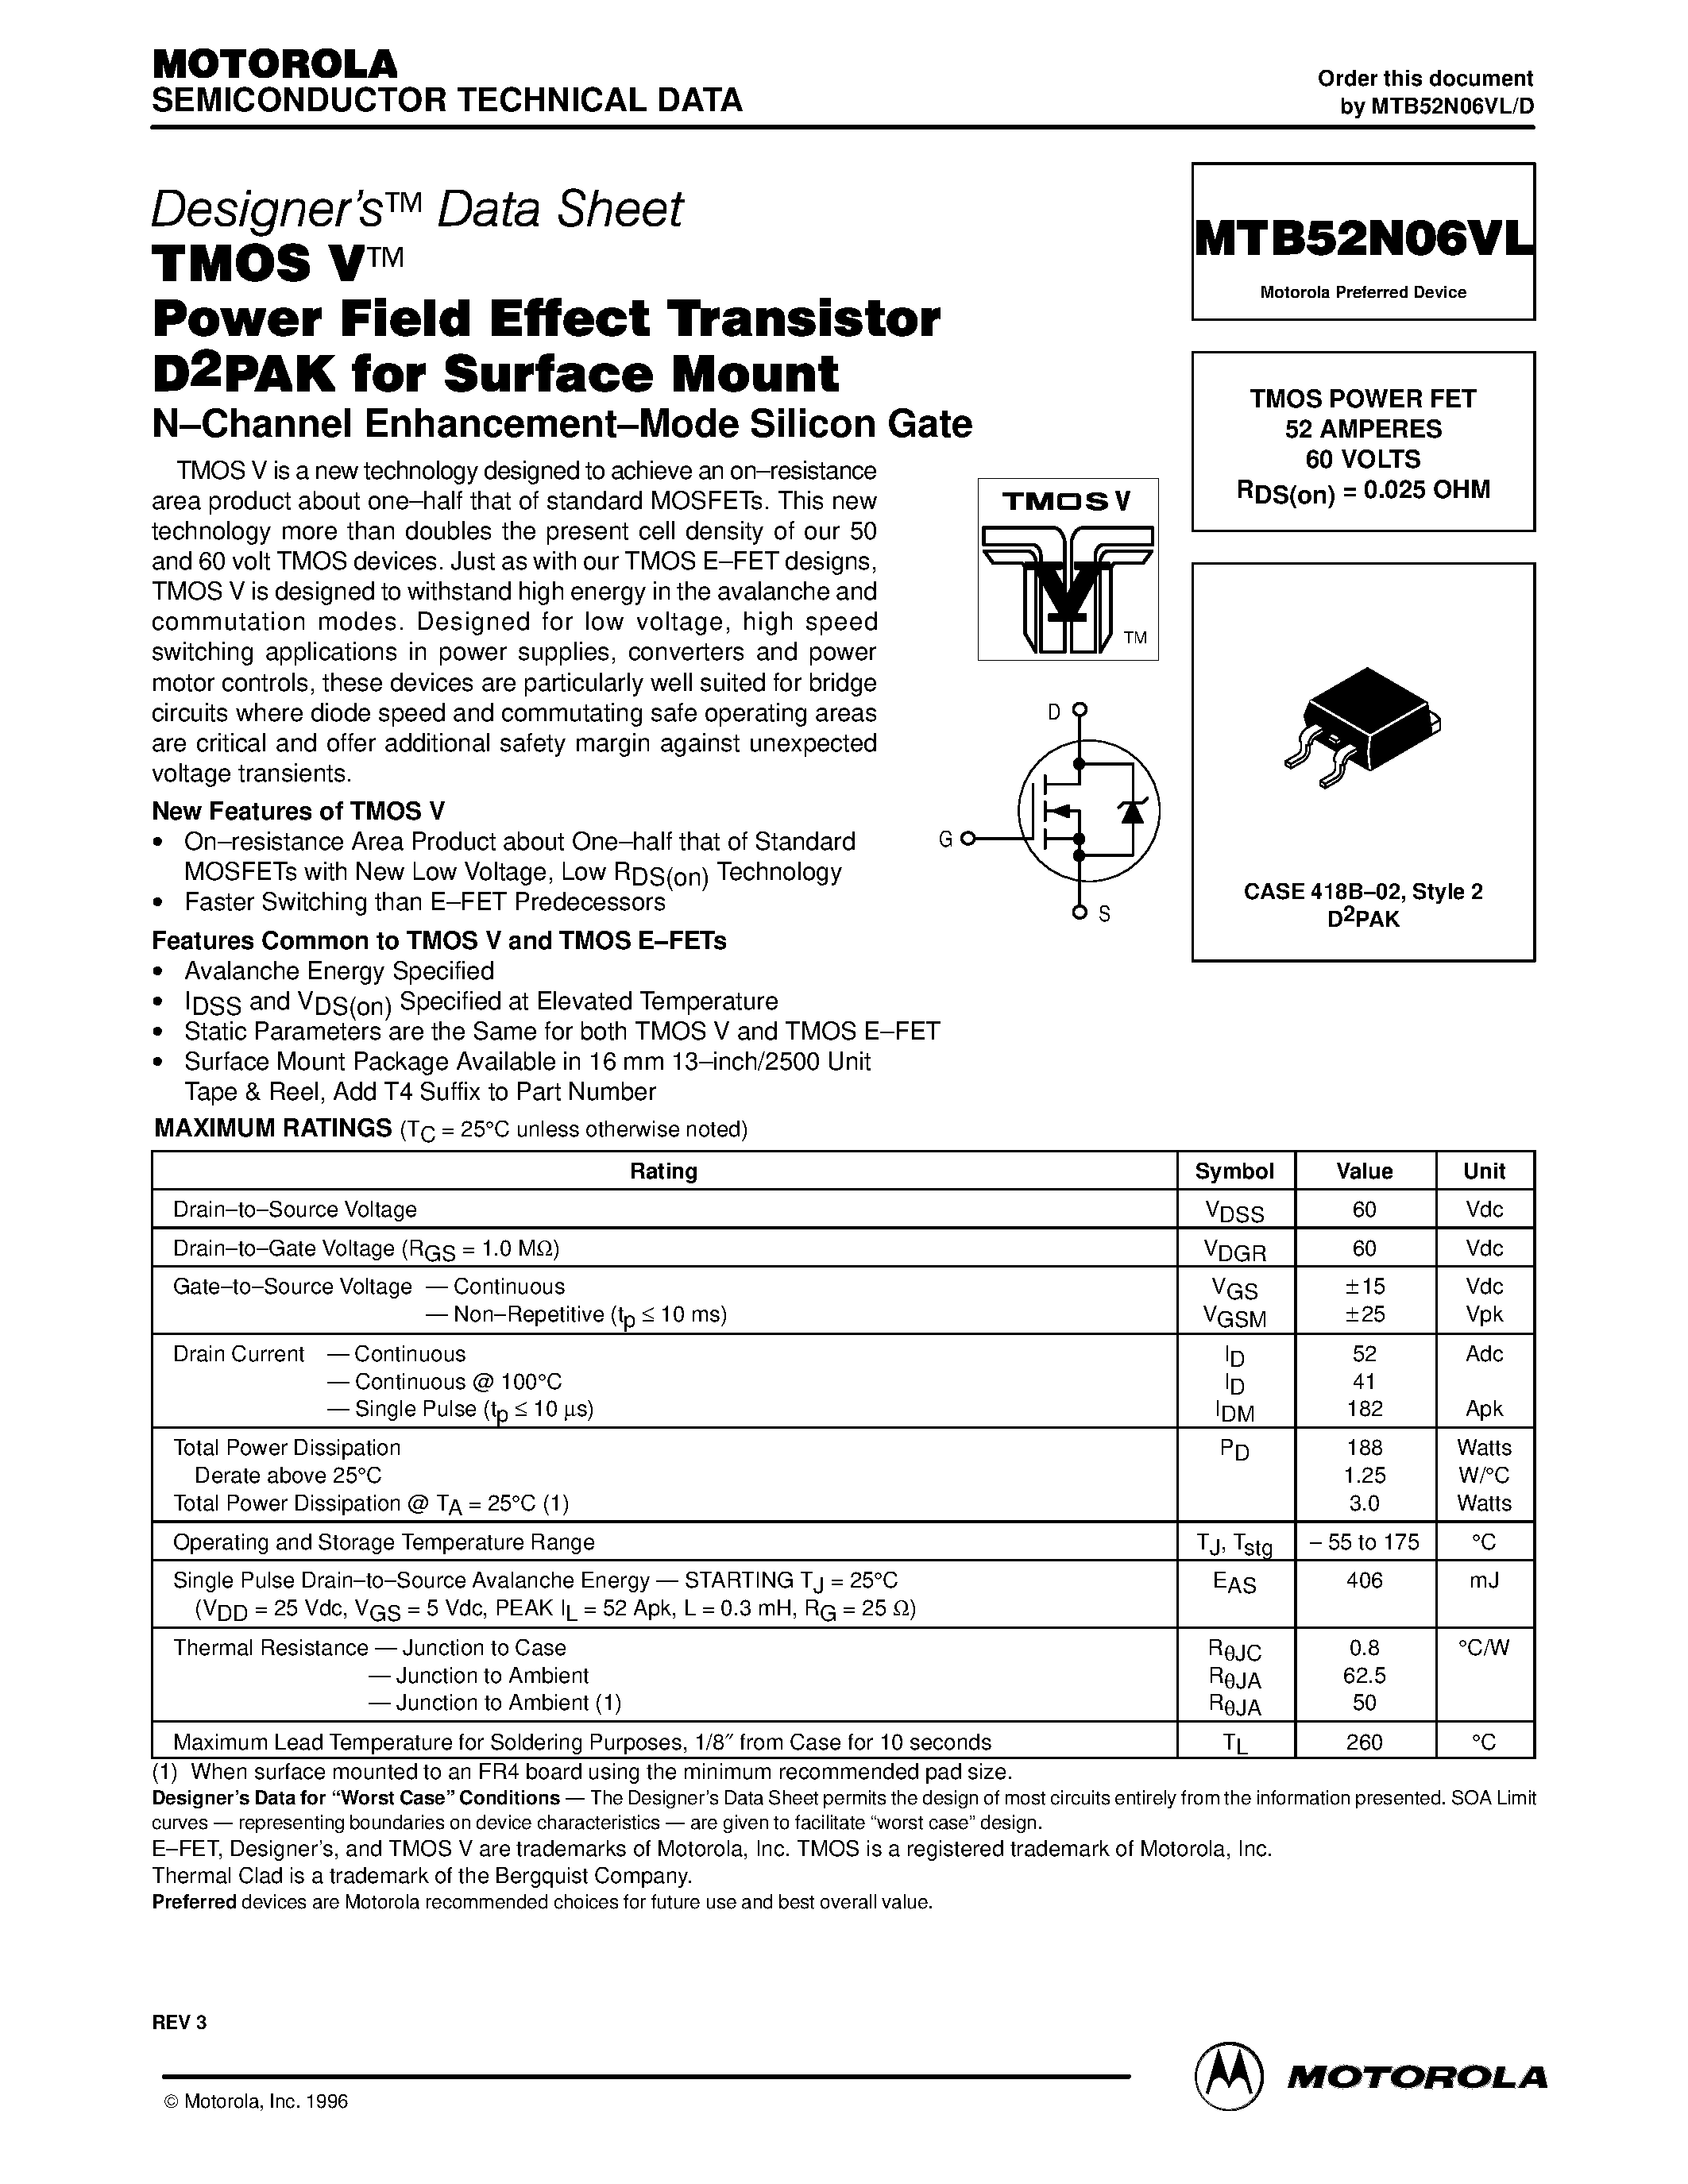 Datasheet MTB52N06VL - TMOS POWER FET 52 AMPERES 60 VOLTS page 1